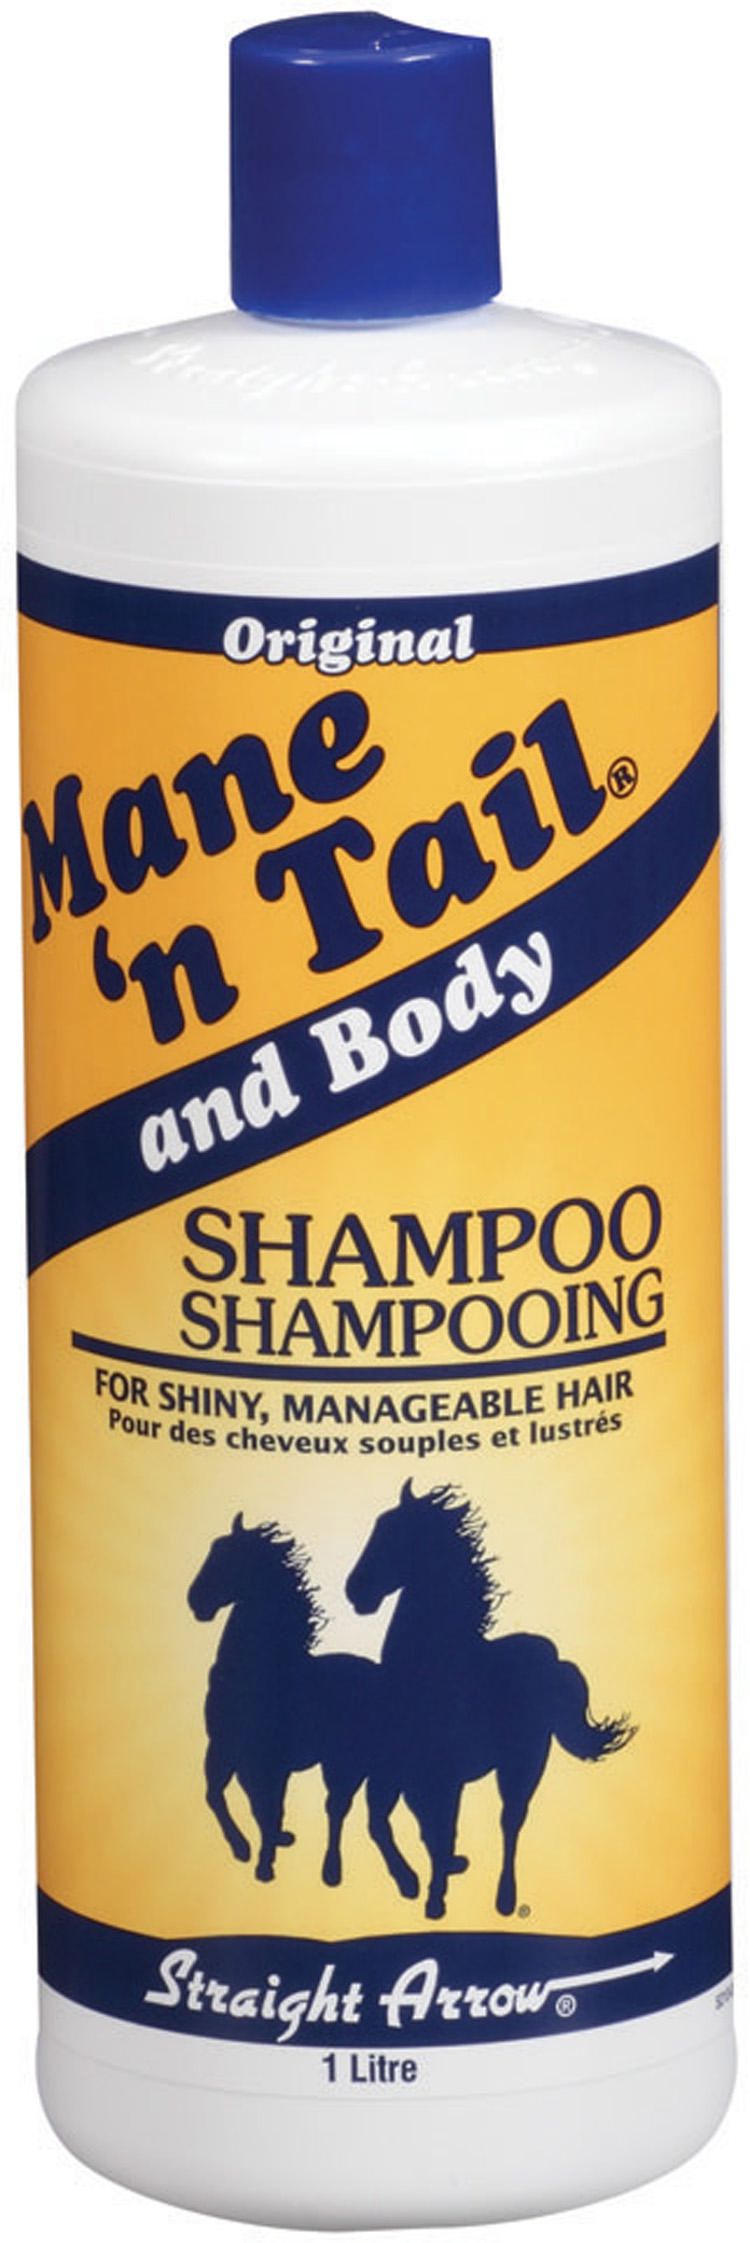 The Original Mane N Tail Shampoo Walmart Canada